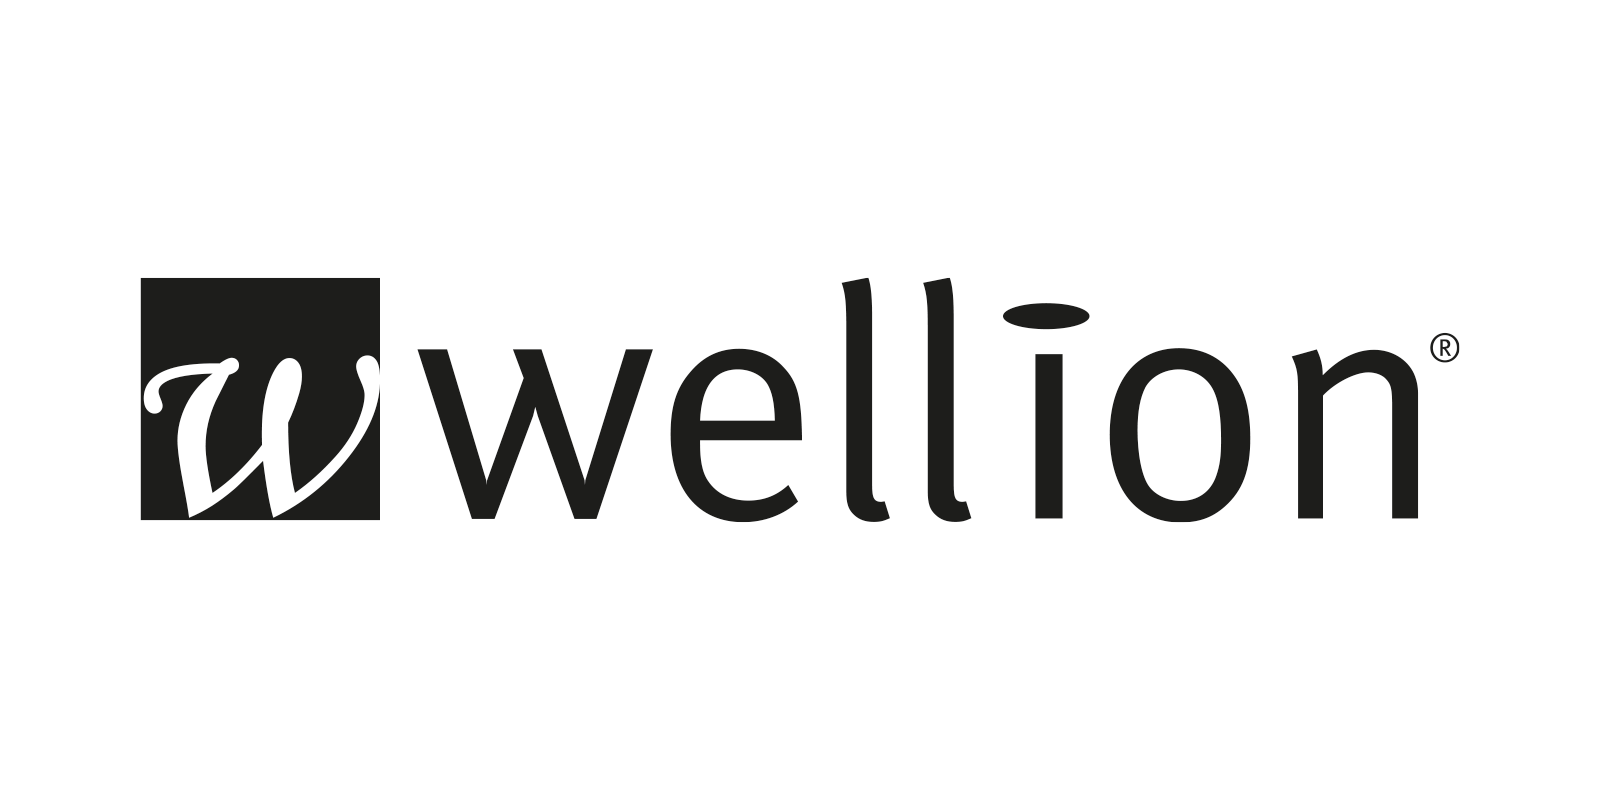 Wellion 1SHOT